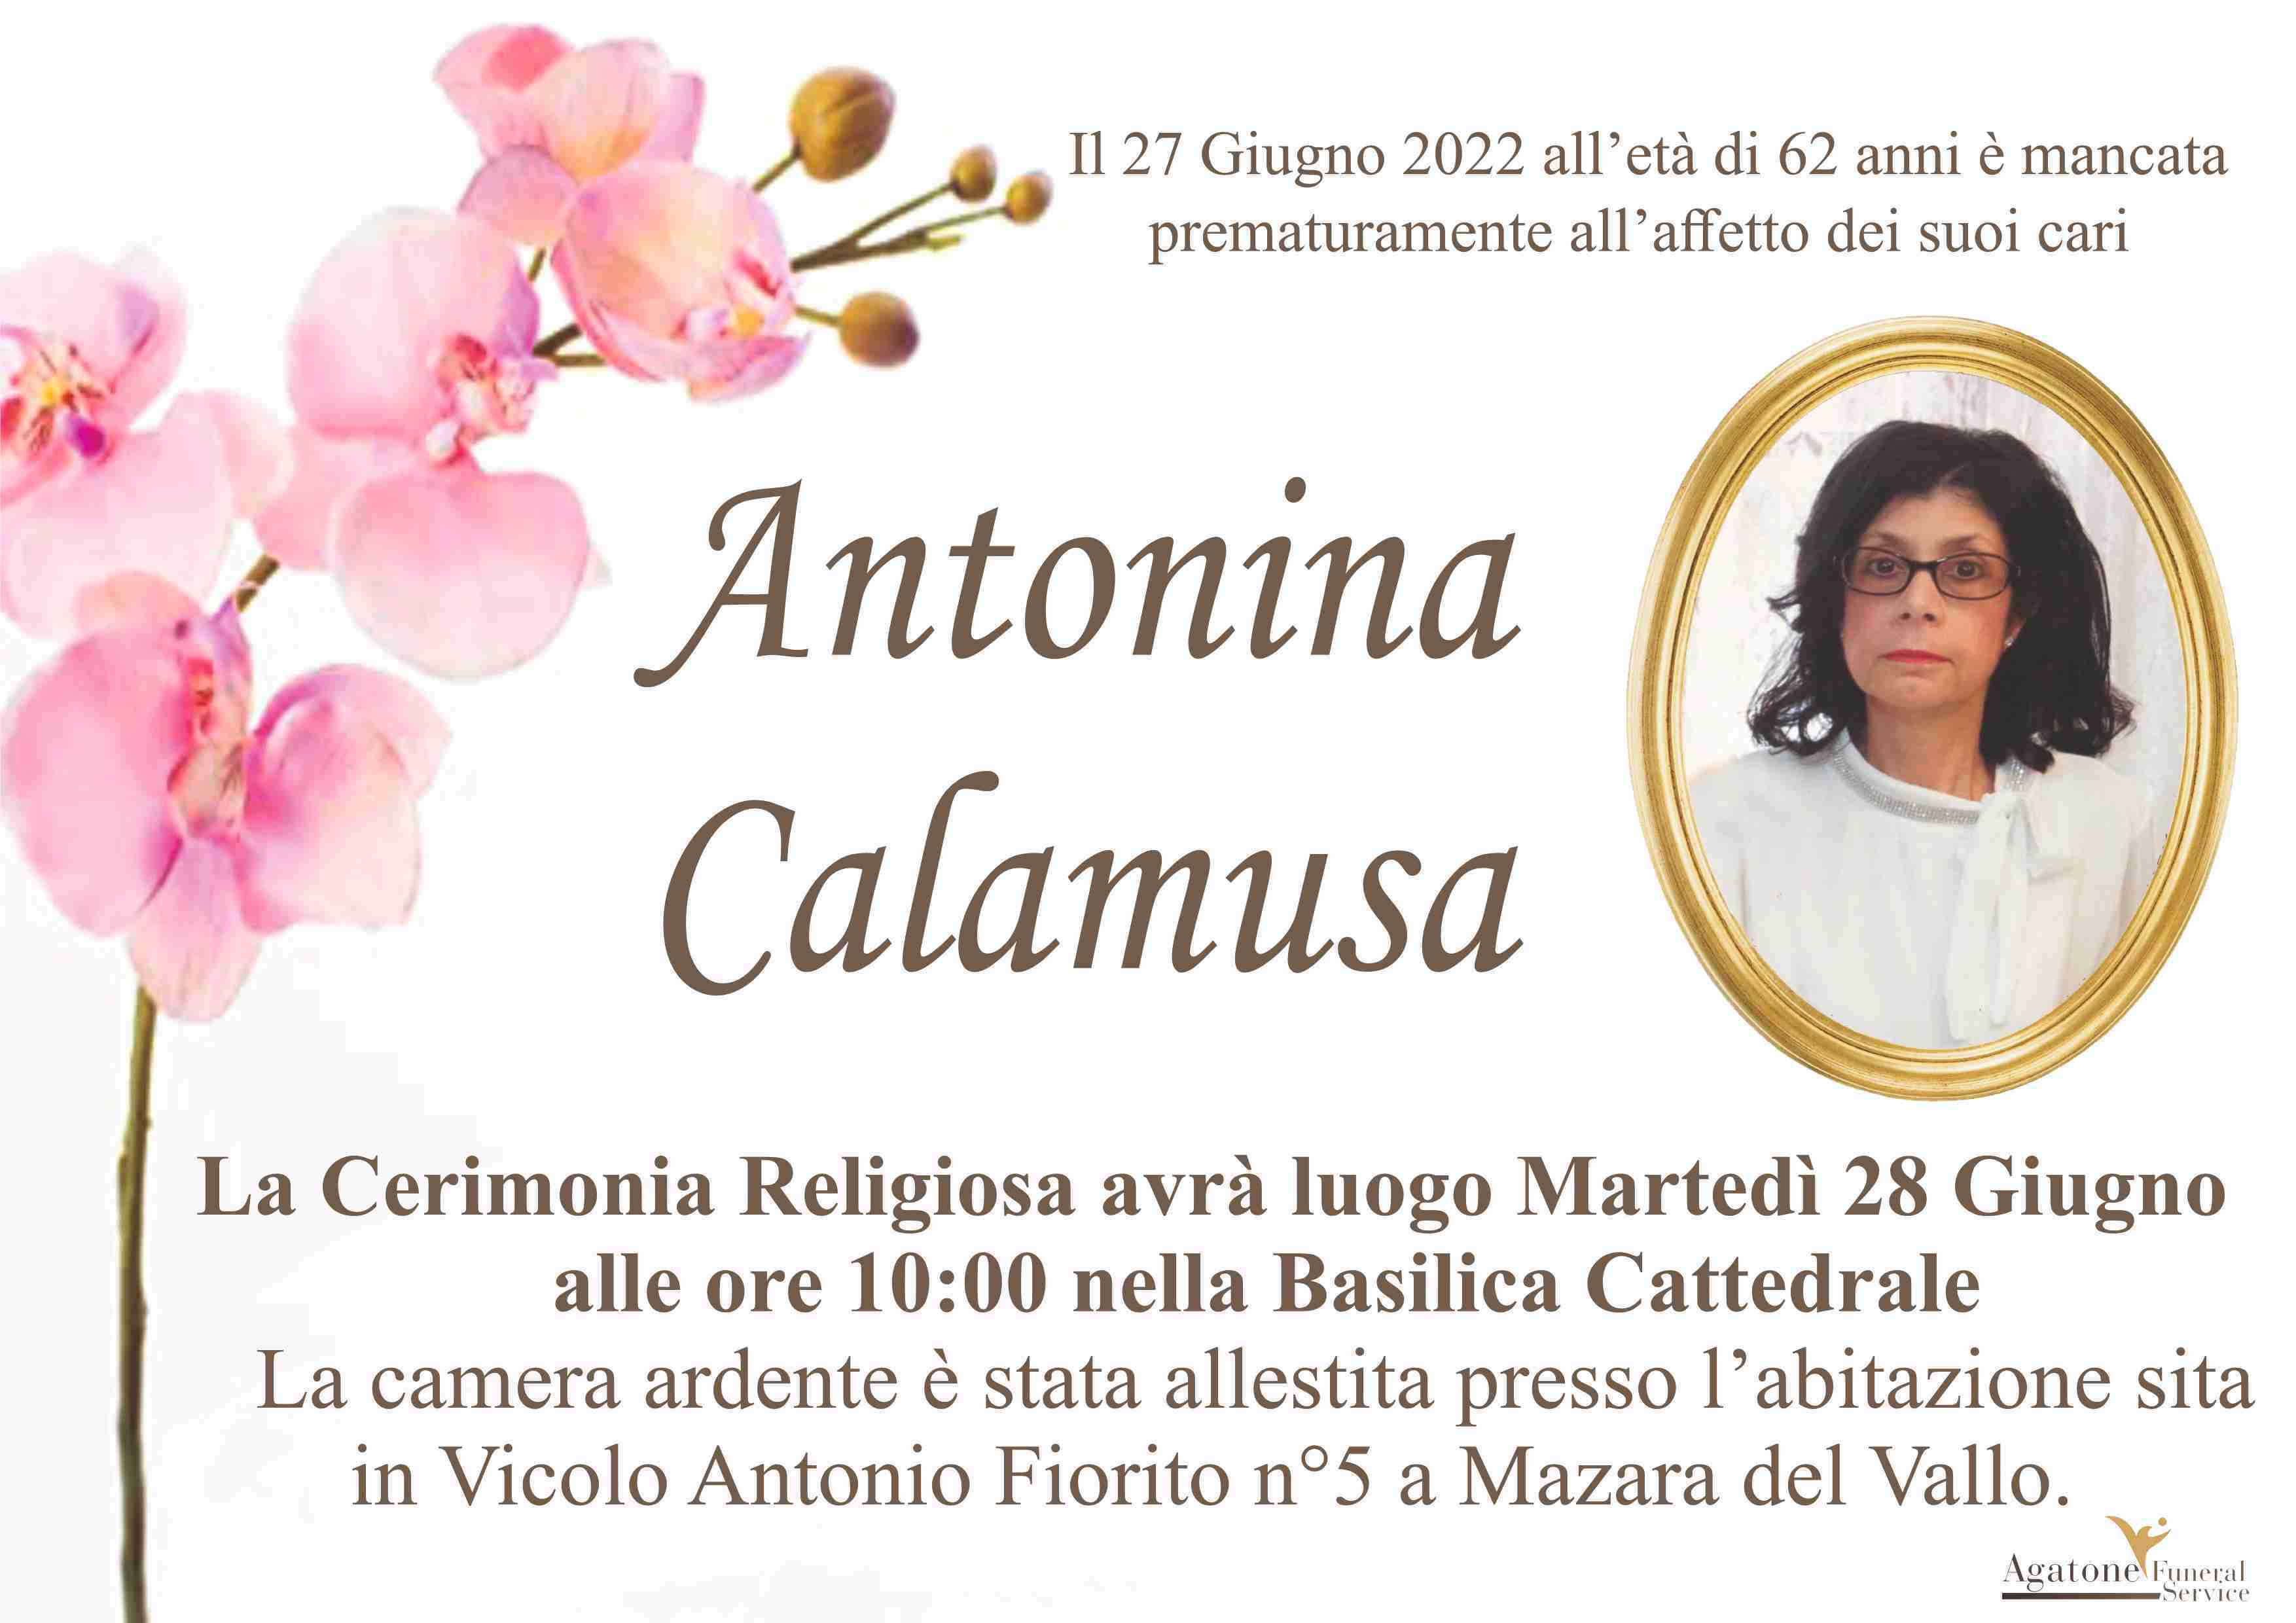 Antonina Calamusa